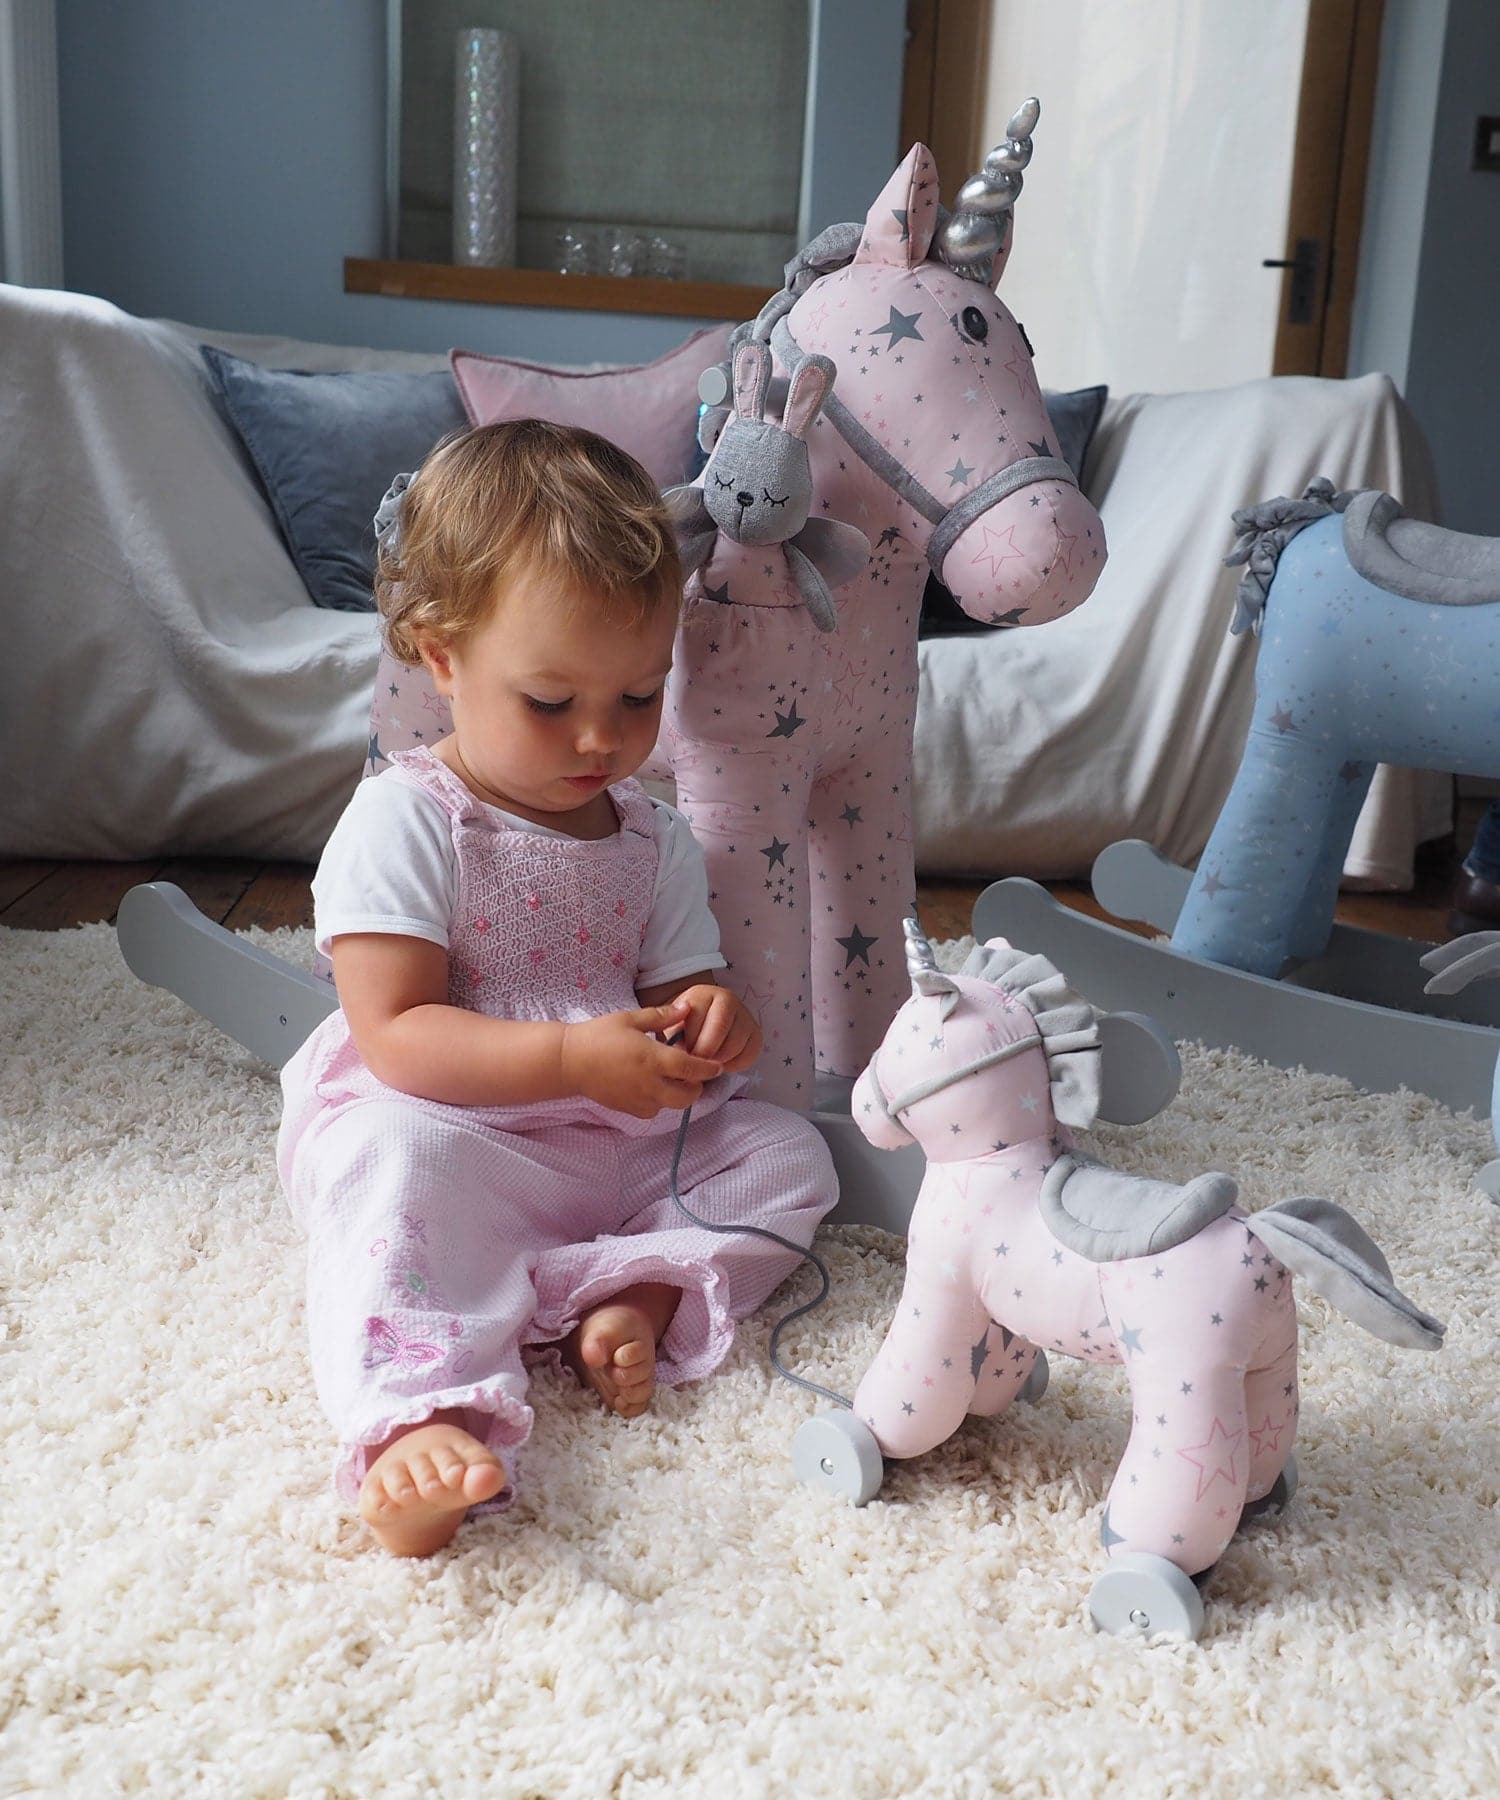 Little Bird Told Me Celeste Unicorn Pull Along Toy -  | For Your Little One